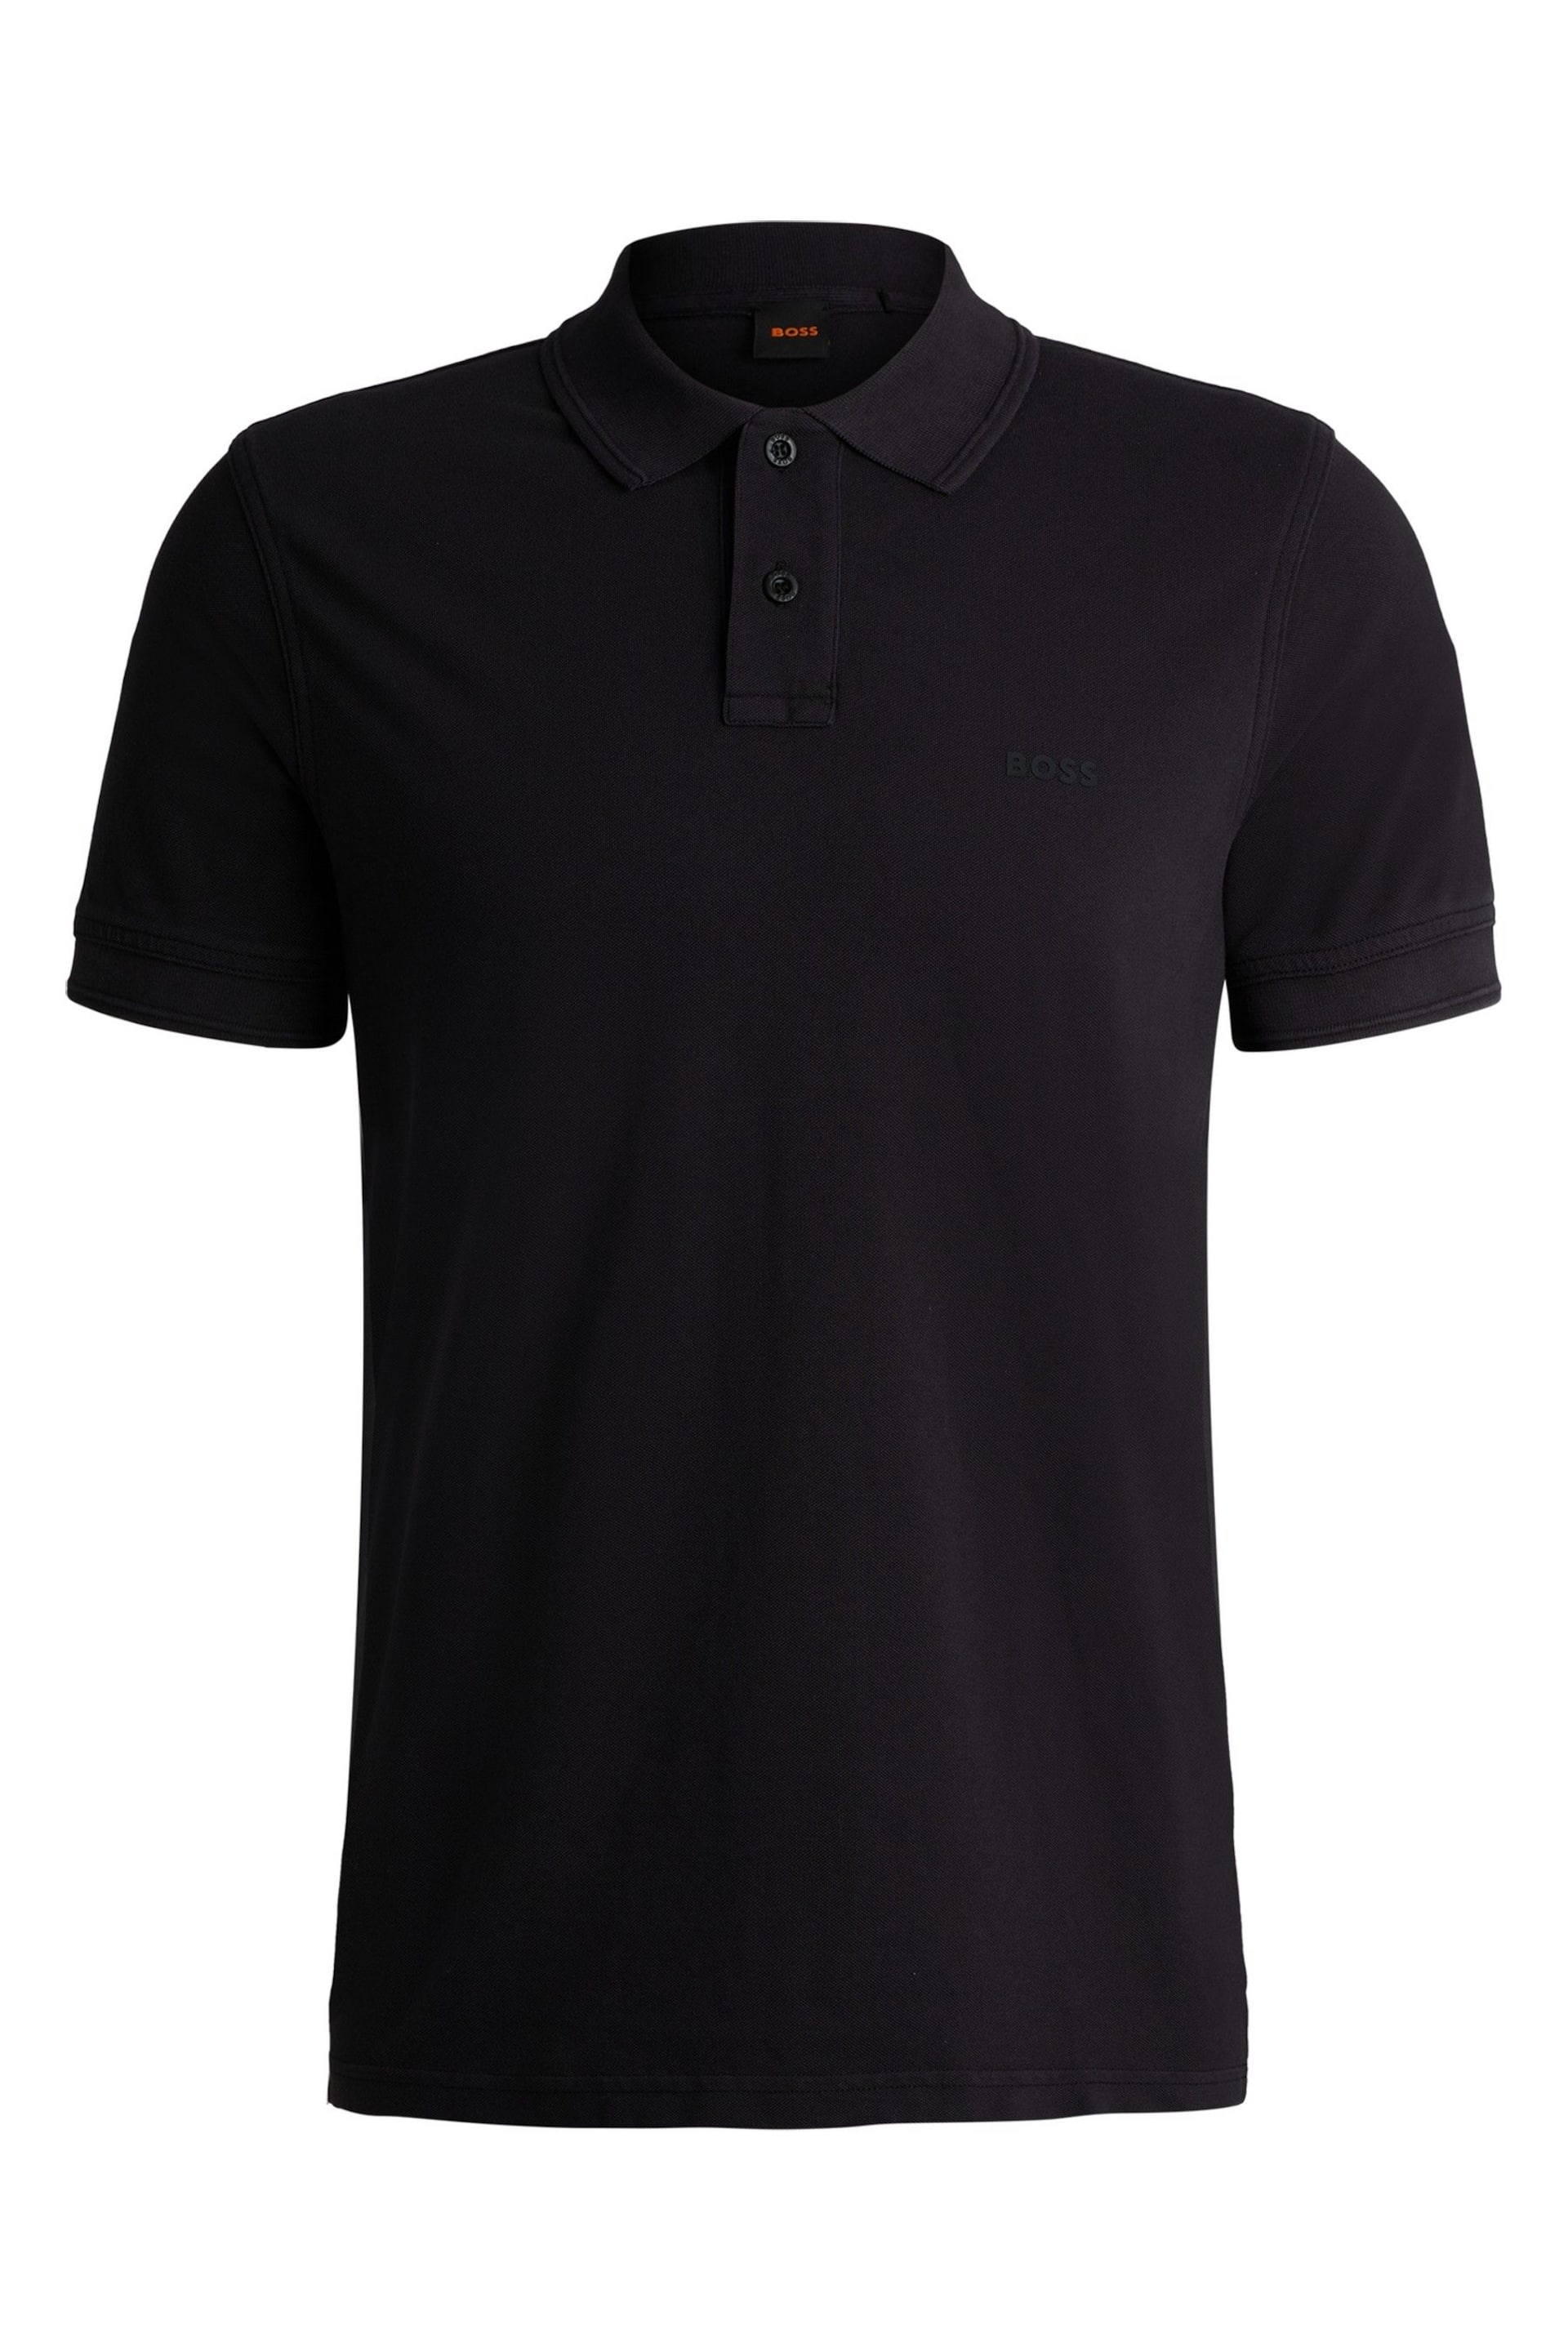 BOSS Black Cotton Pique Polo Shirt - Image 5 of 5